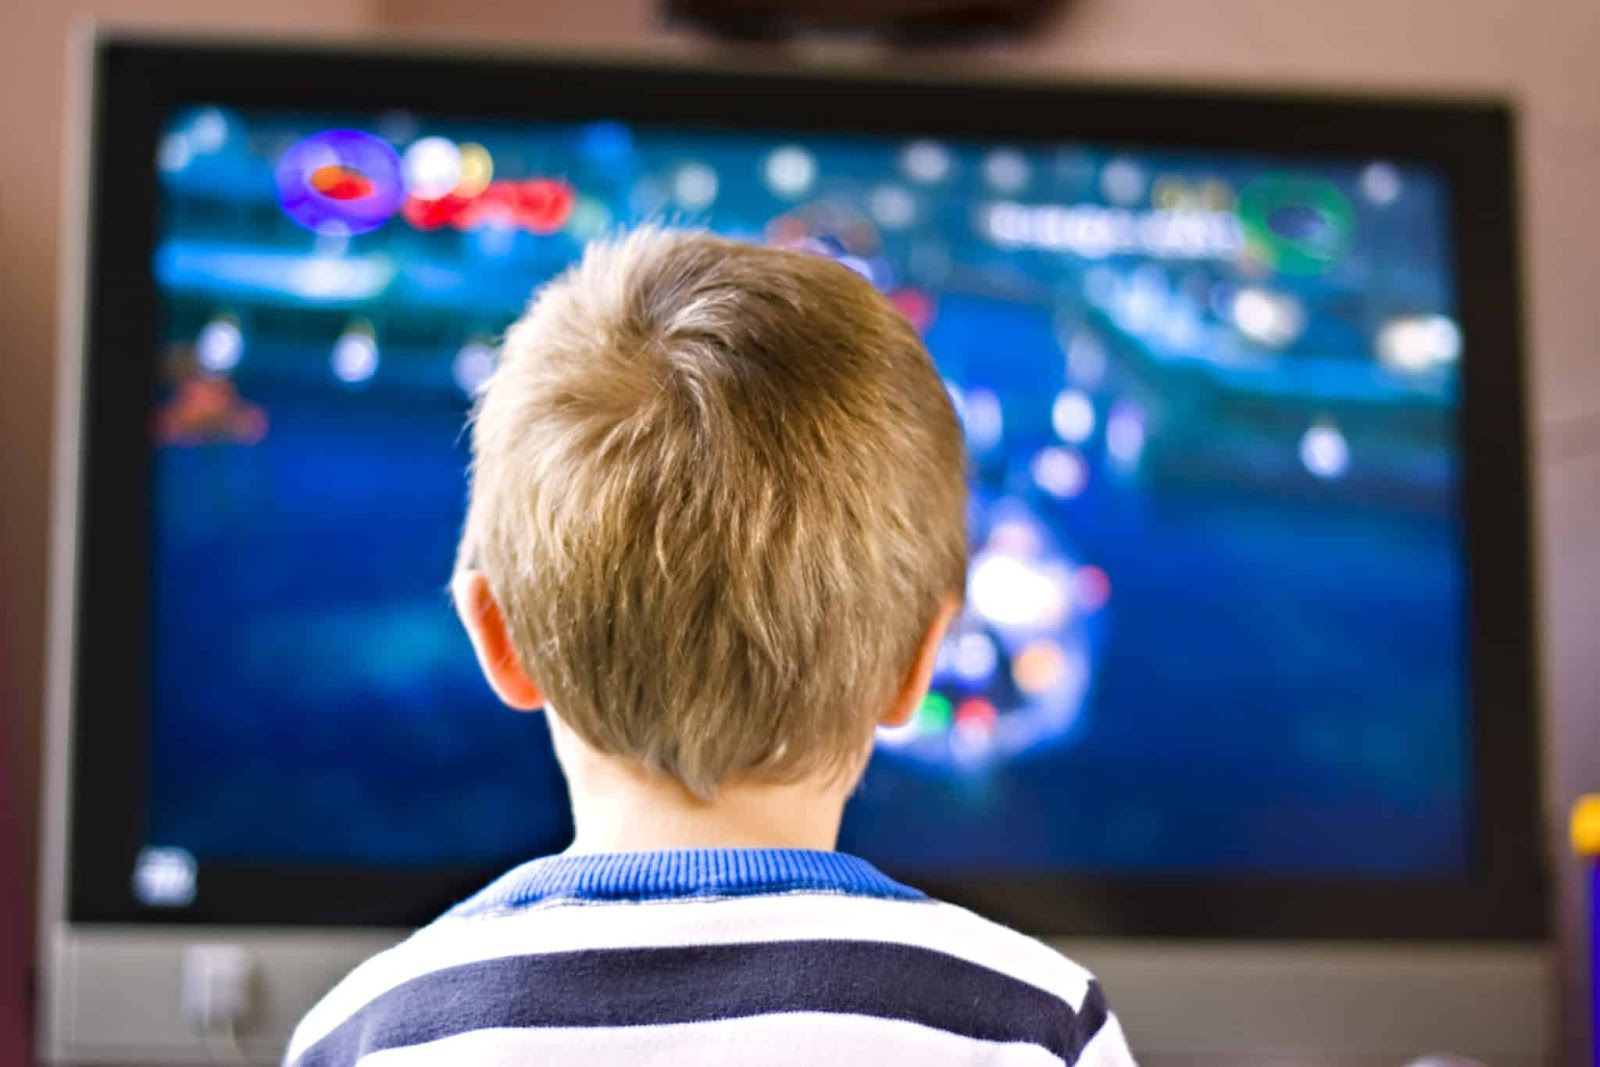 Child watching shows that promote language development